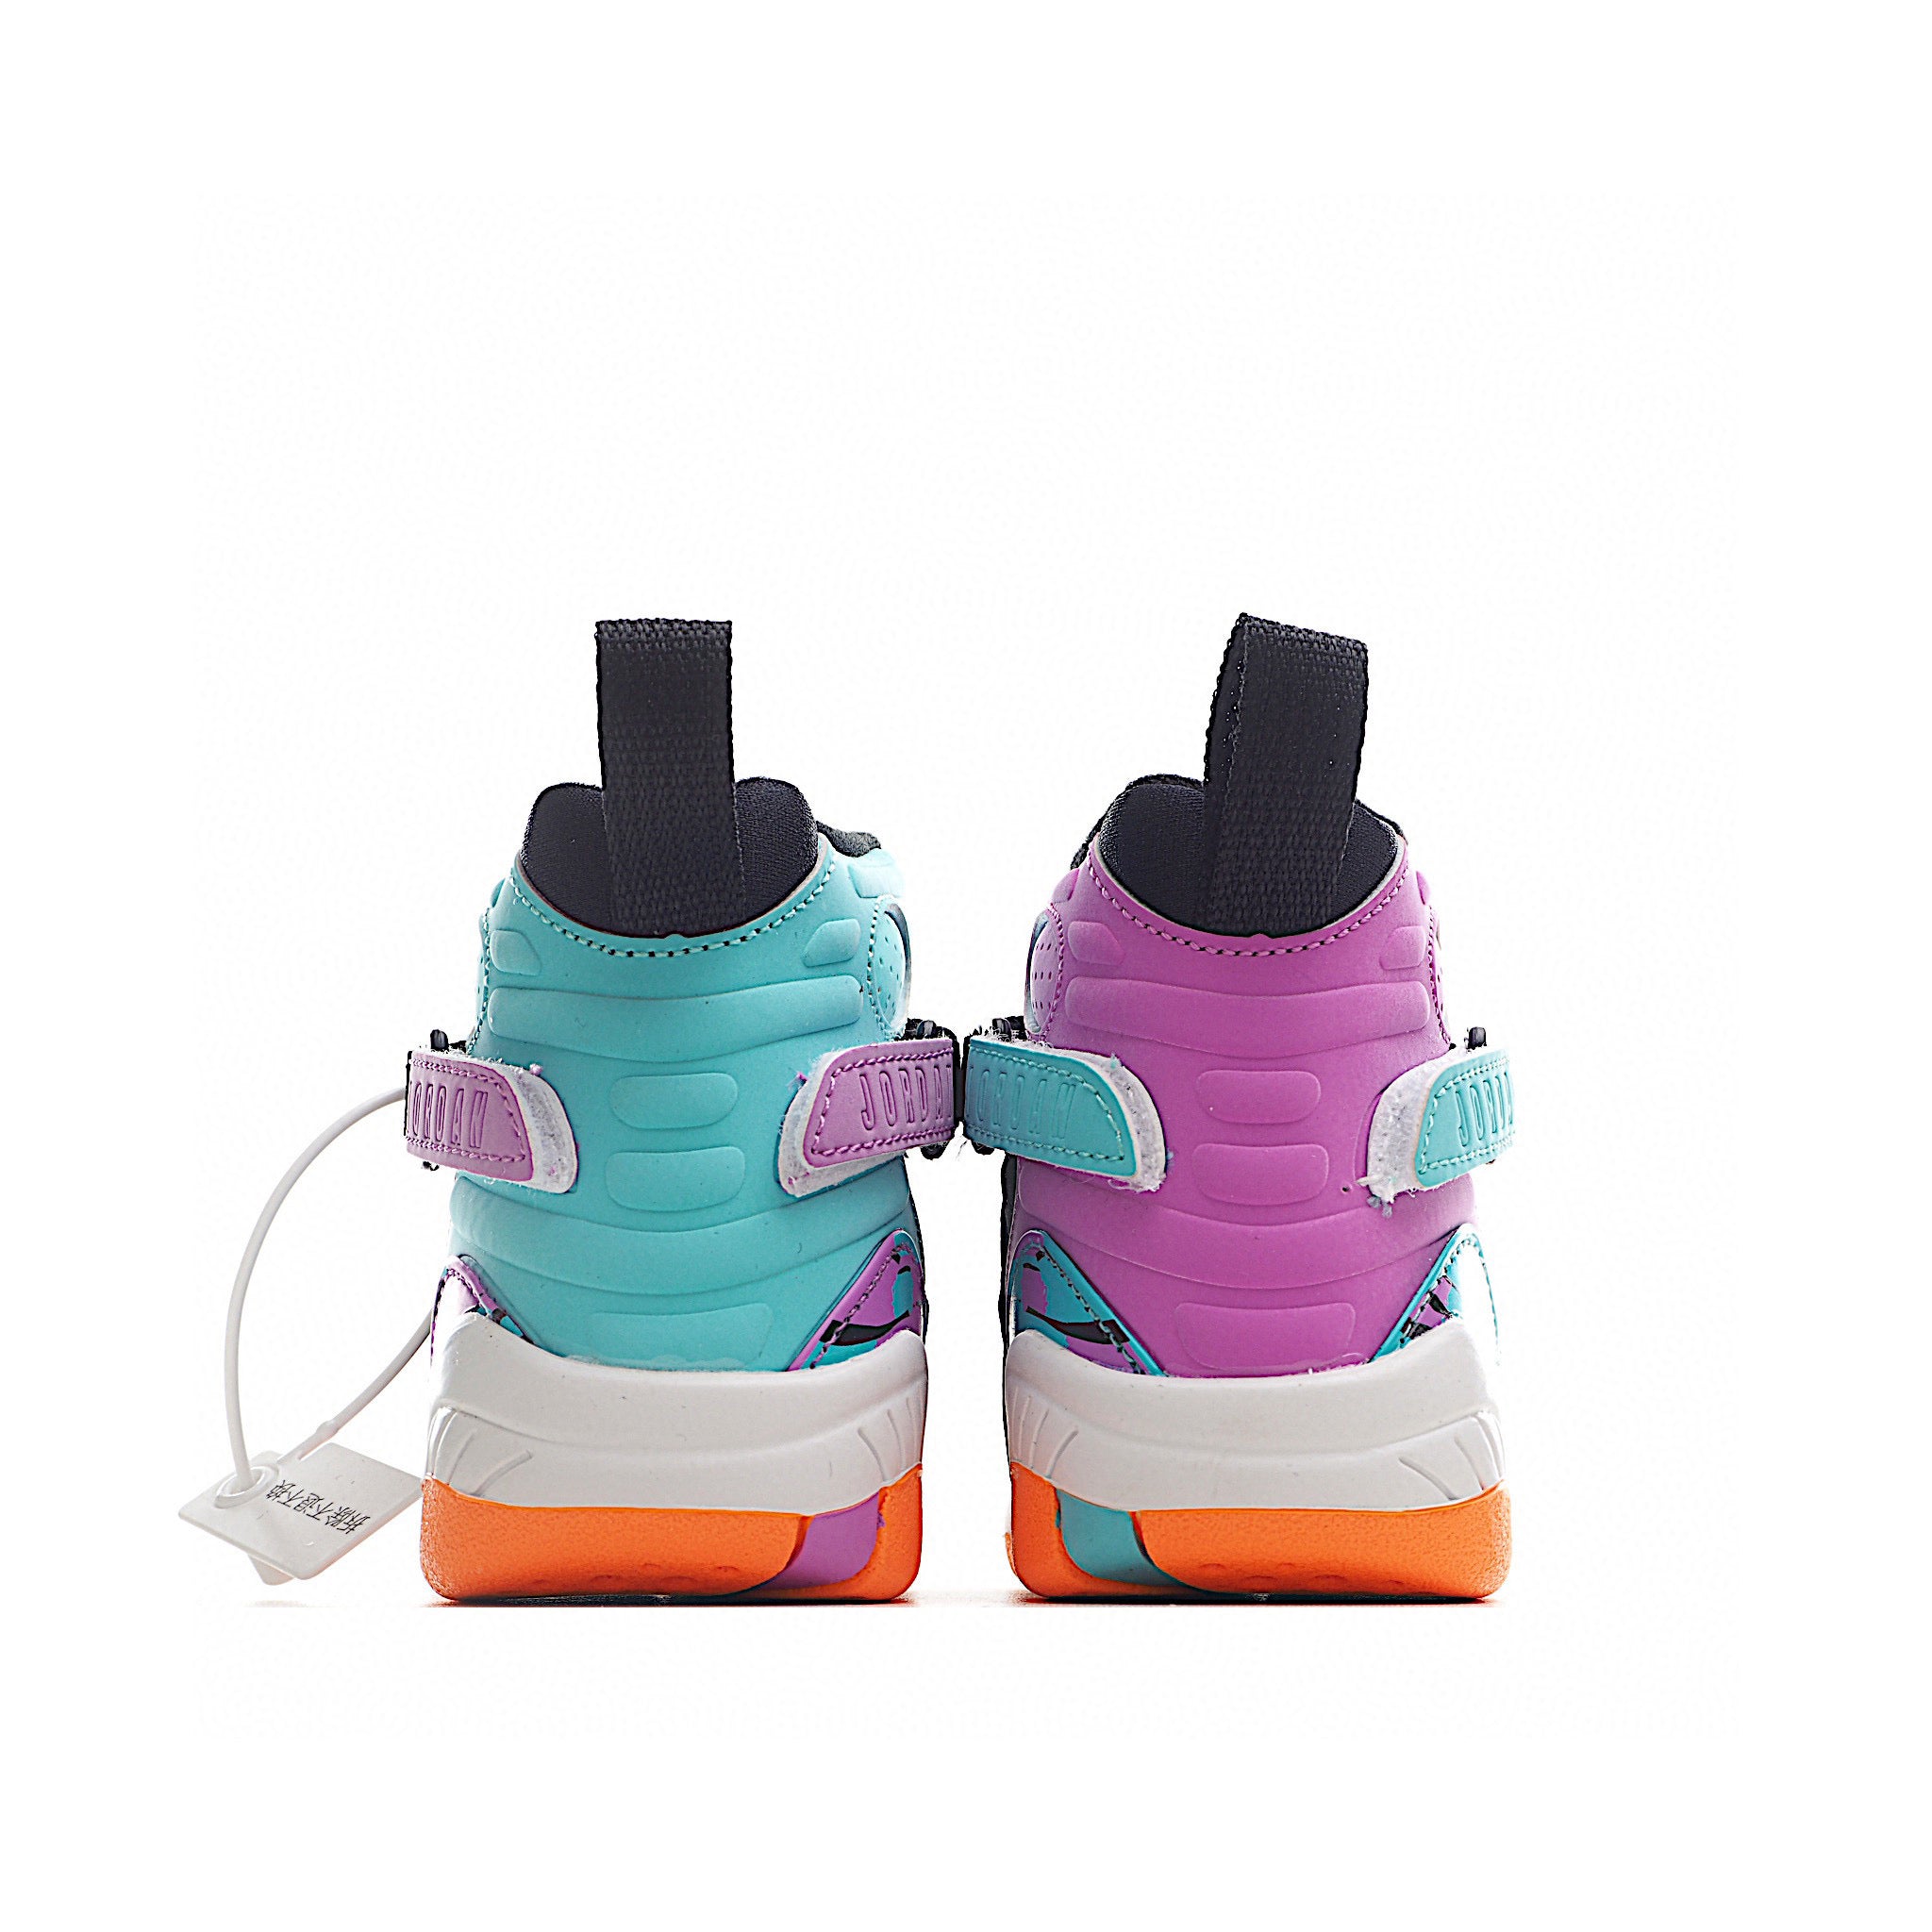 Nike air jordan 8 retro aqua purple  shoes